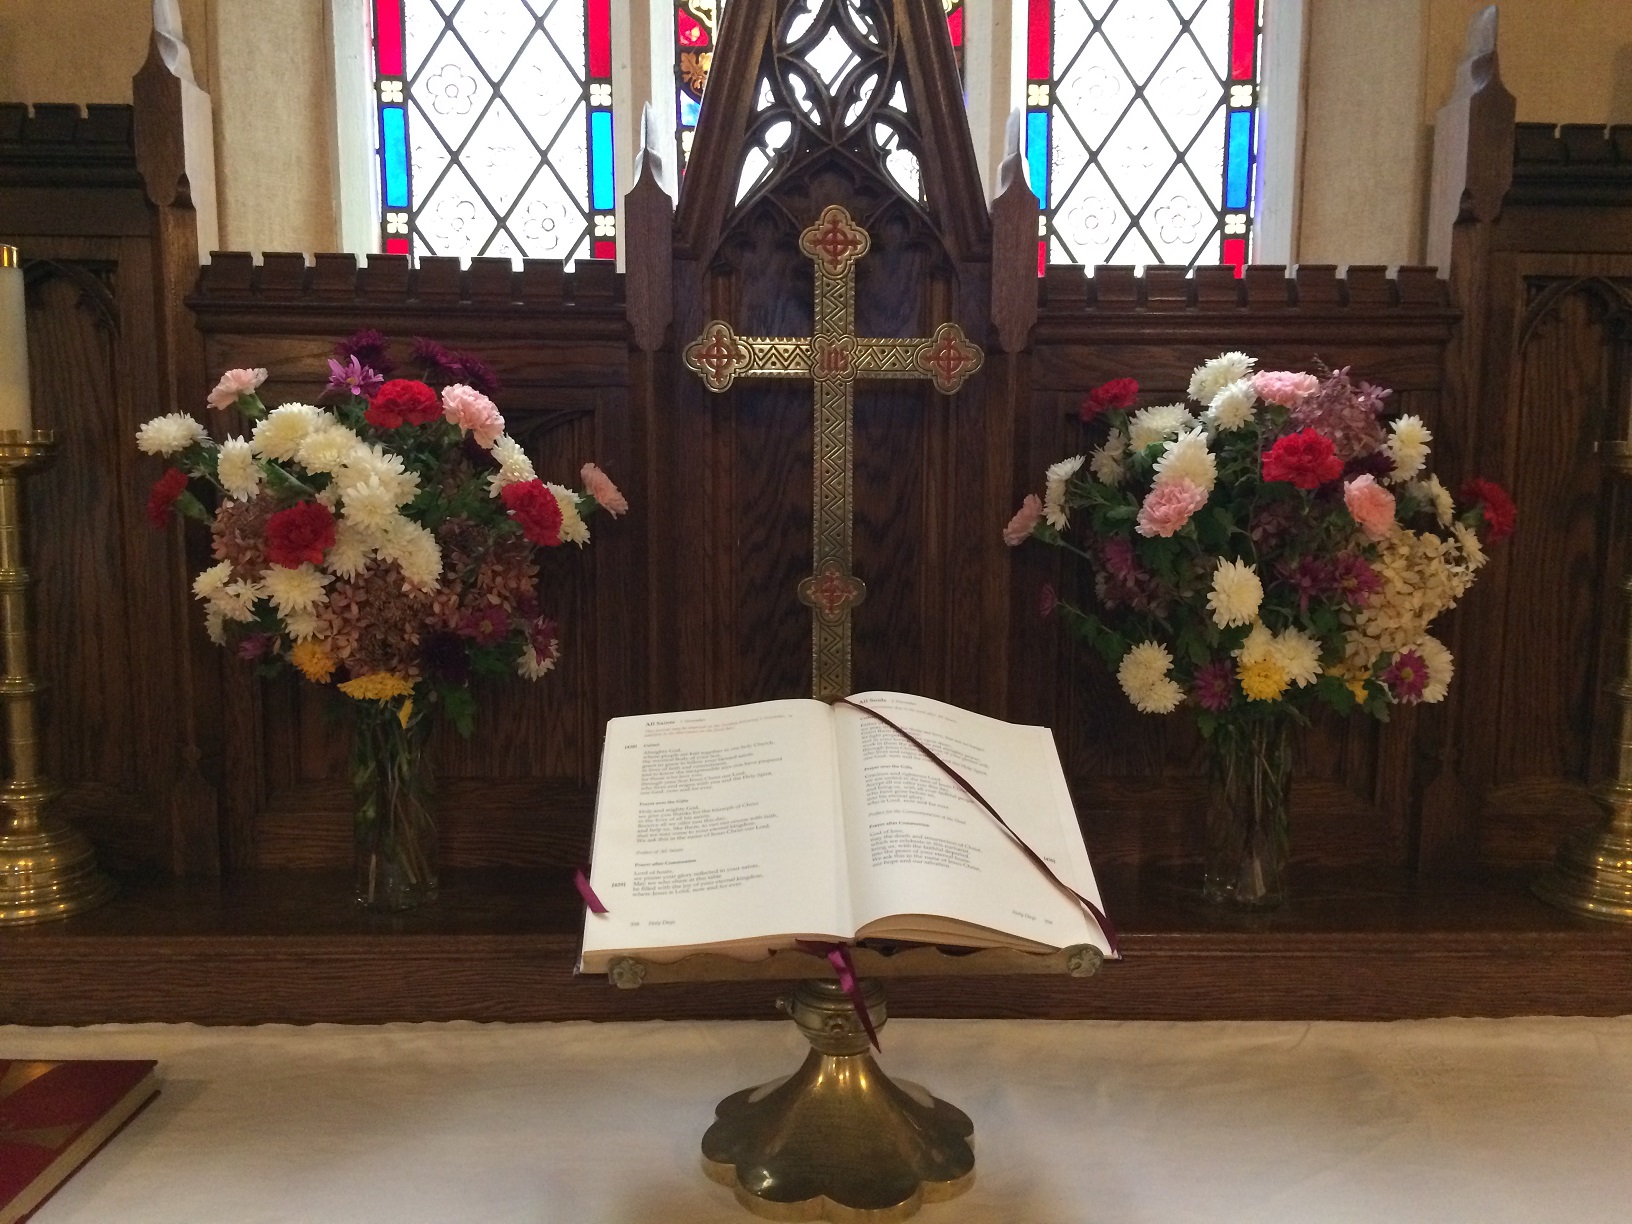 Flowers on the altar Sunday, November 12th.